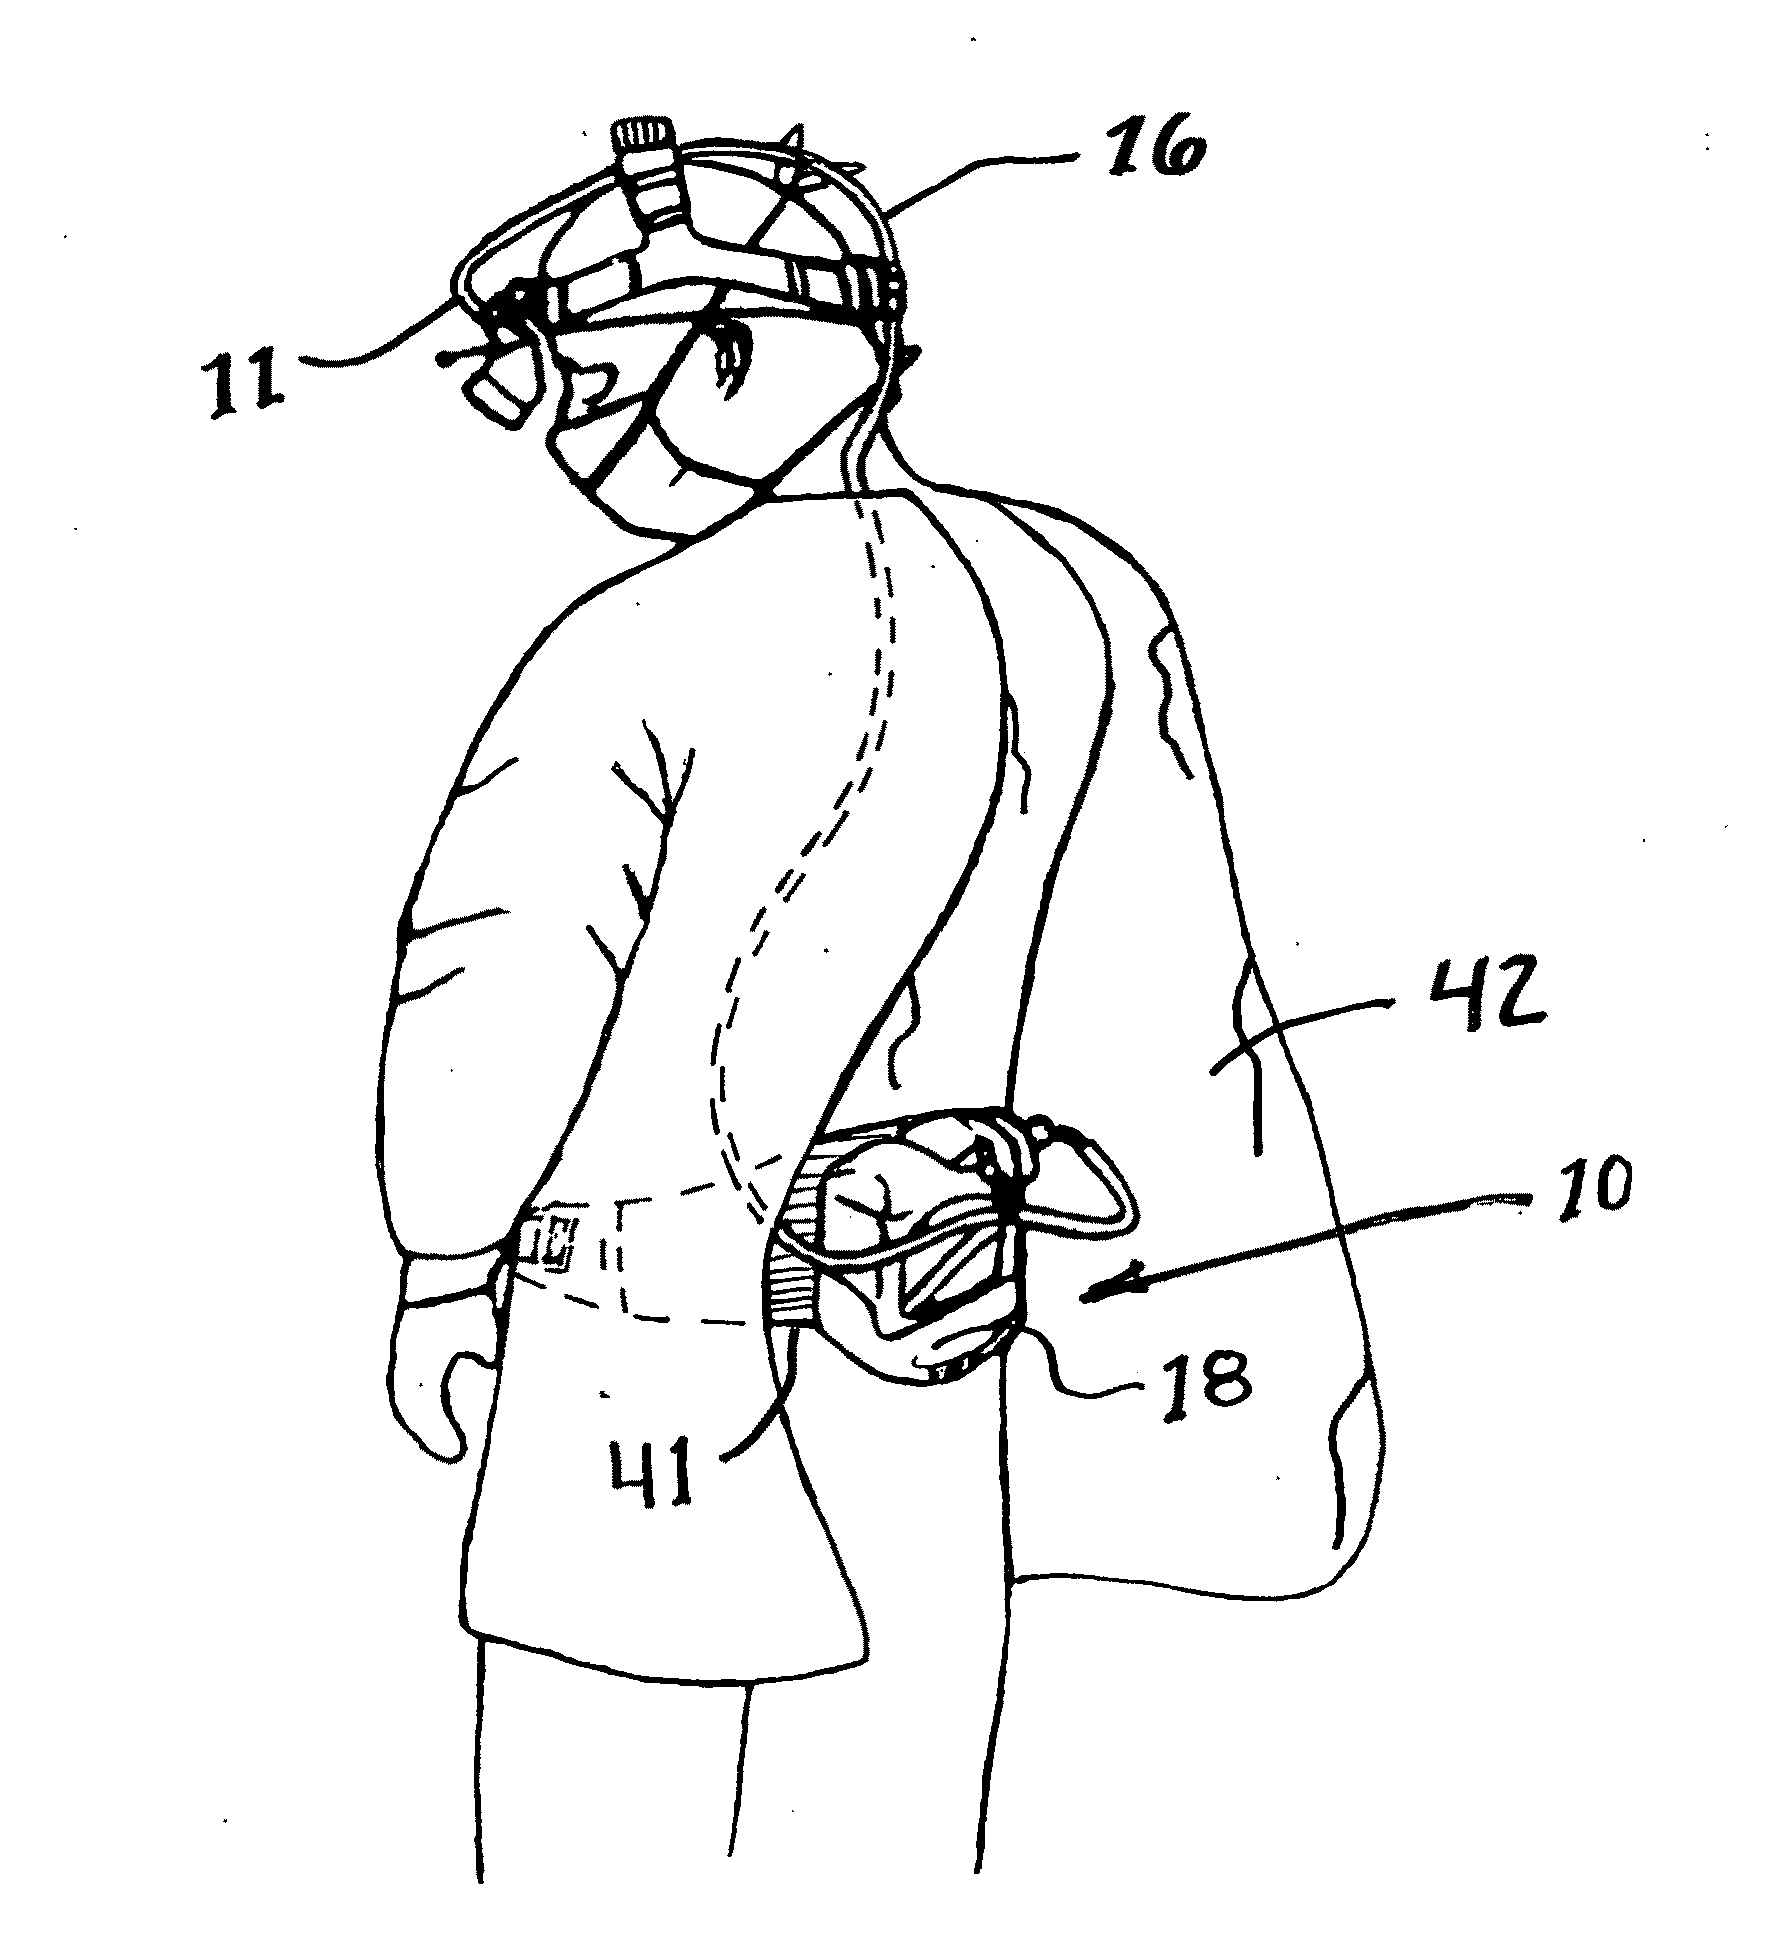 Headlight apparatus and method